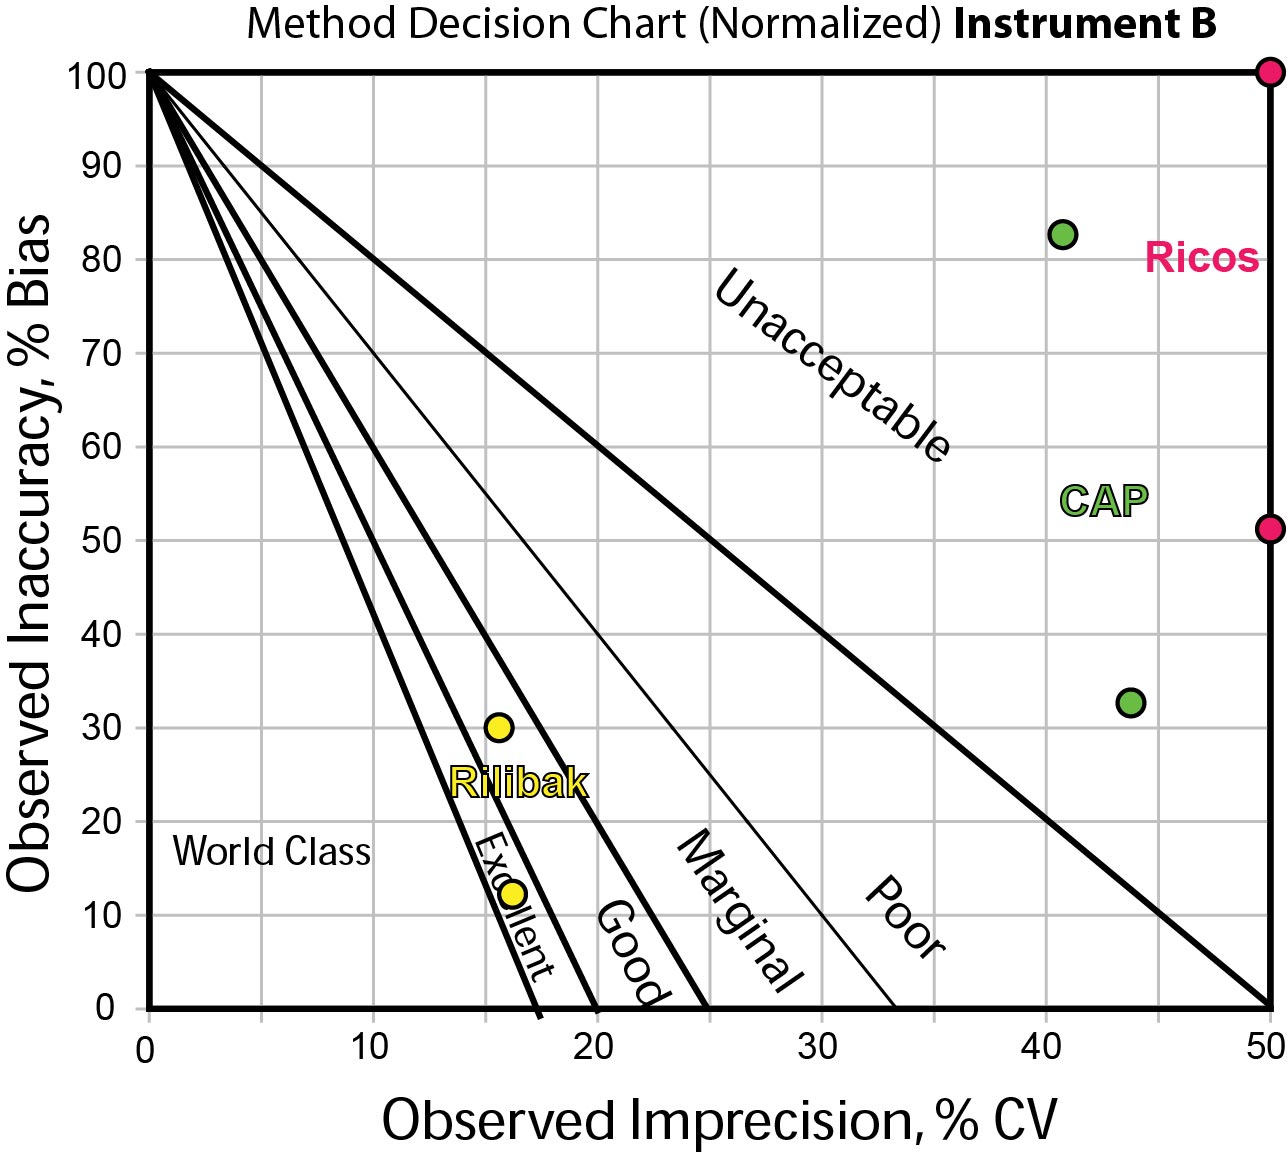 2012-HbA1c-Normalized Method Decision Chart for POC Method B